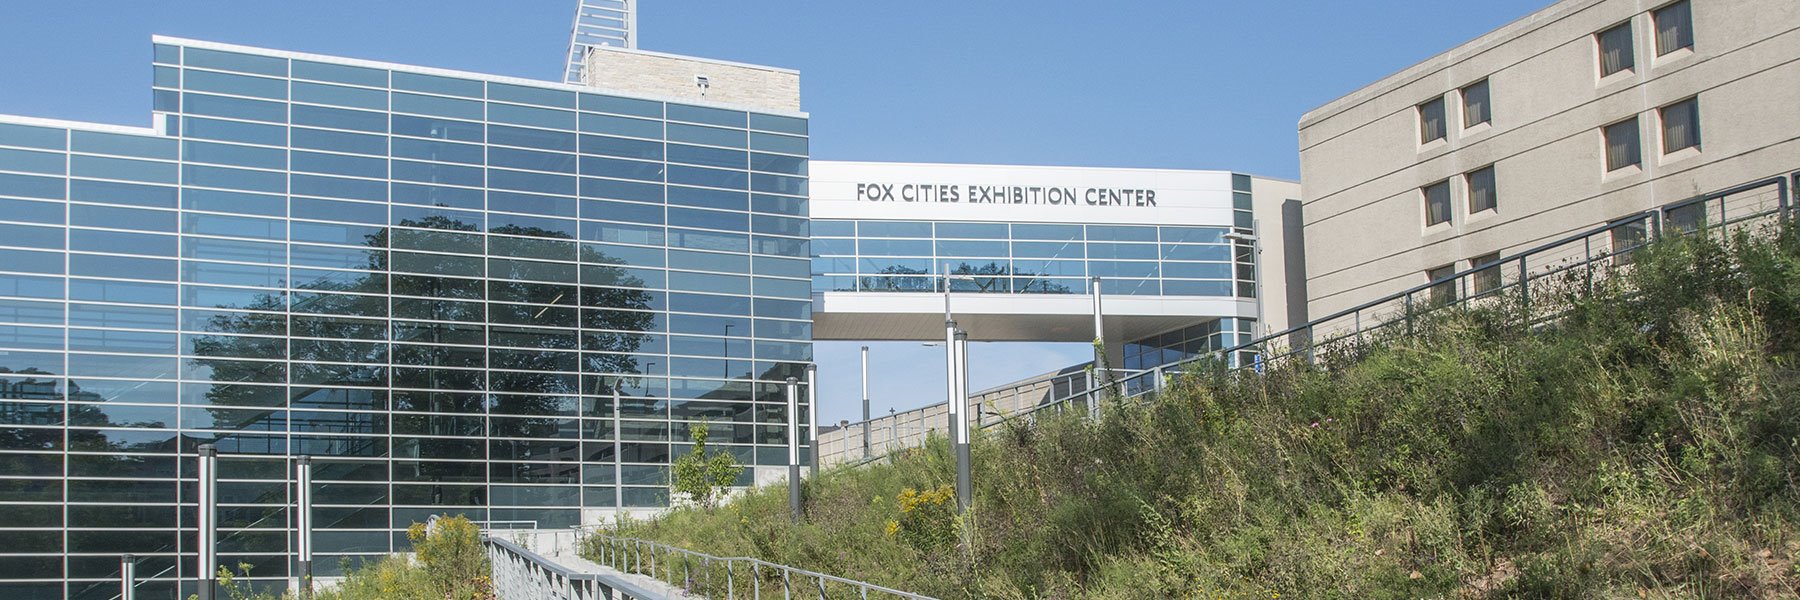 Planning of Fox Cities Exhibition Center, Appleton, Wisconsin